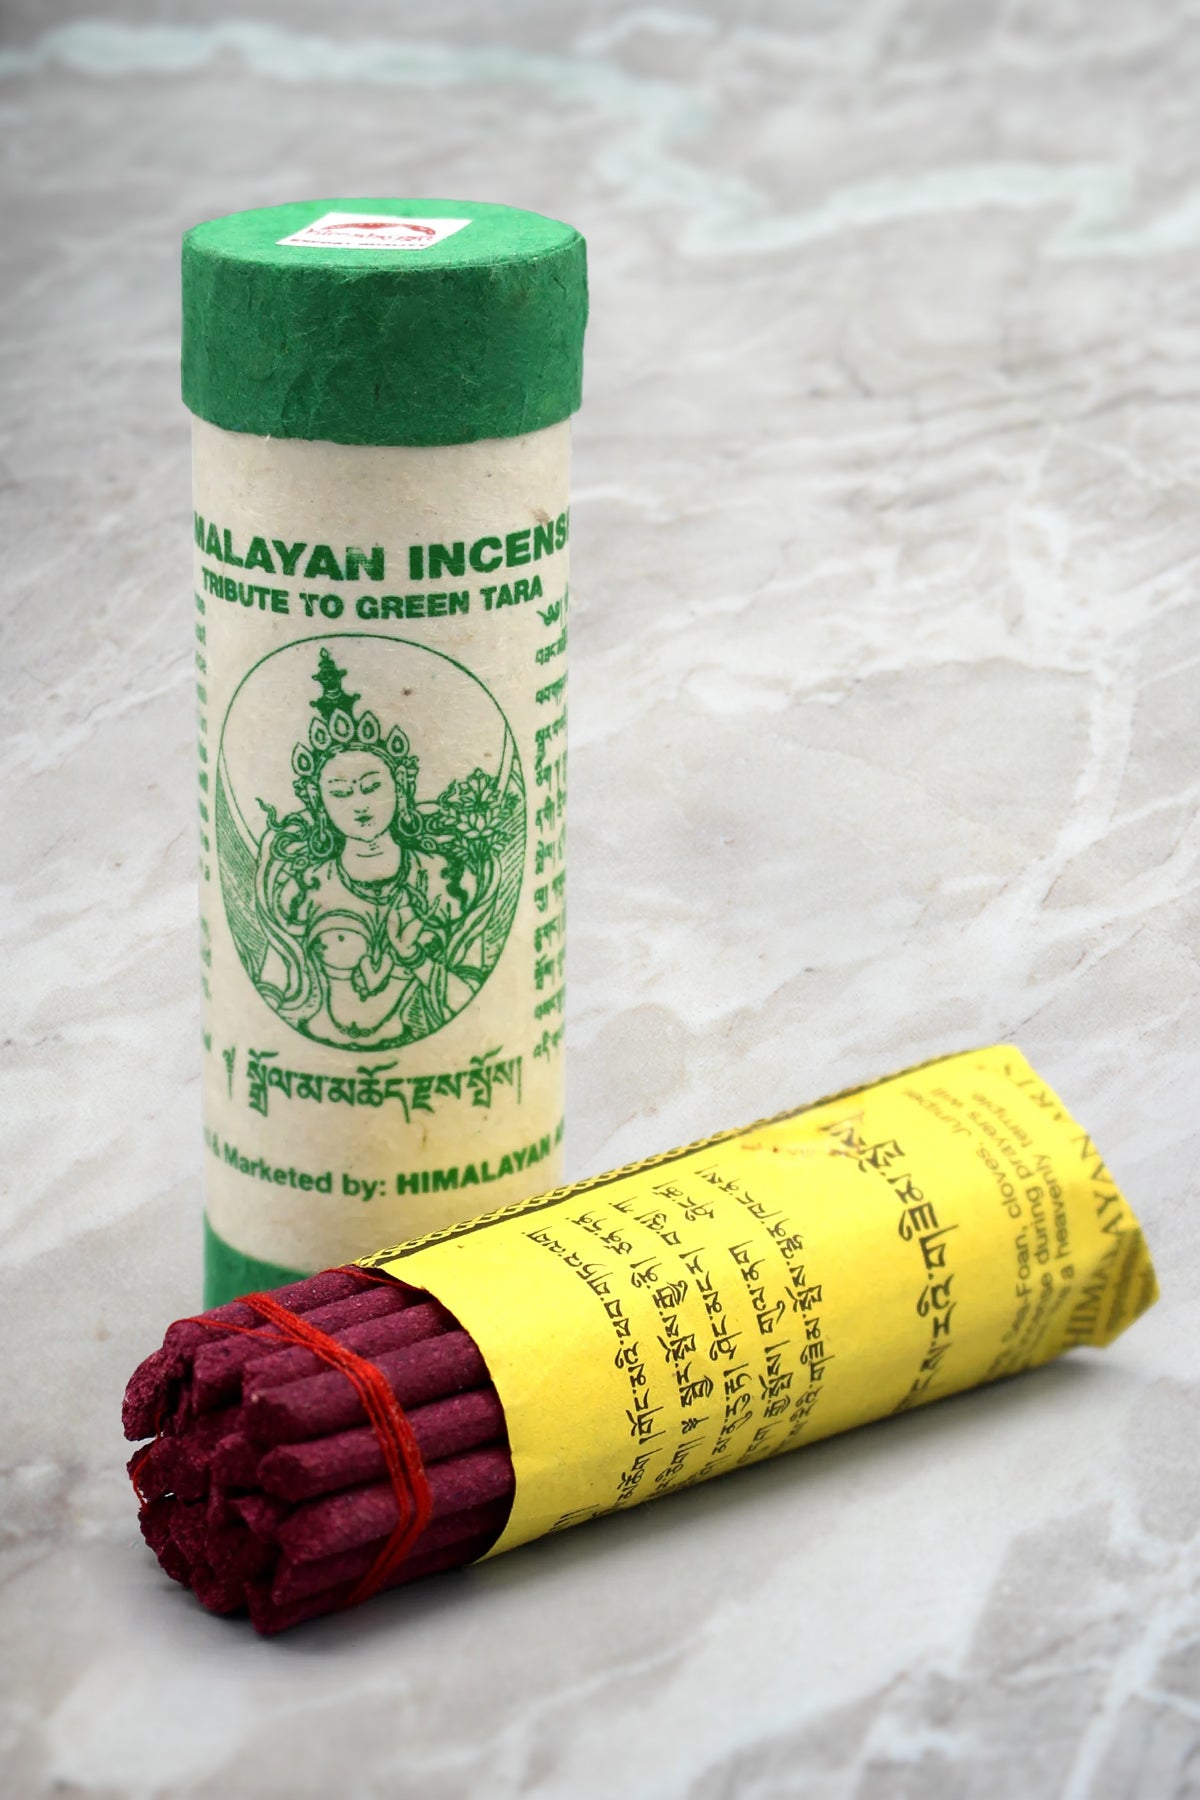 Tribute to Green Tara Himalayan Incense sticks